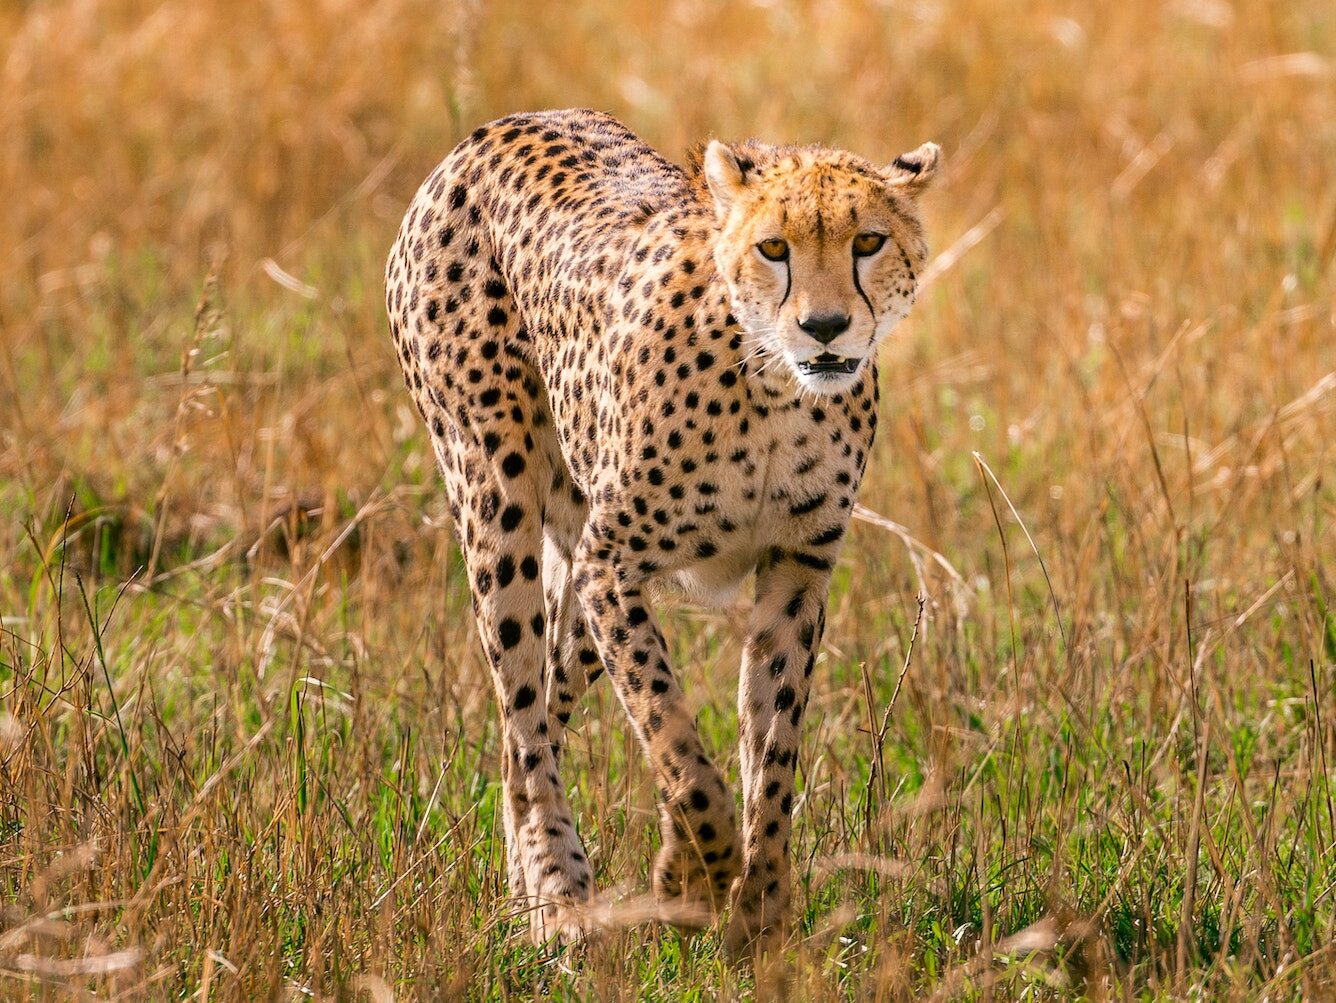 Young cheetah walking in savanna